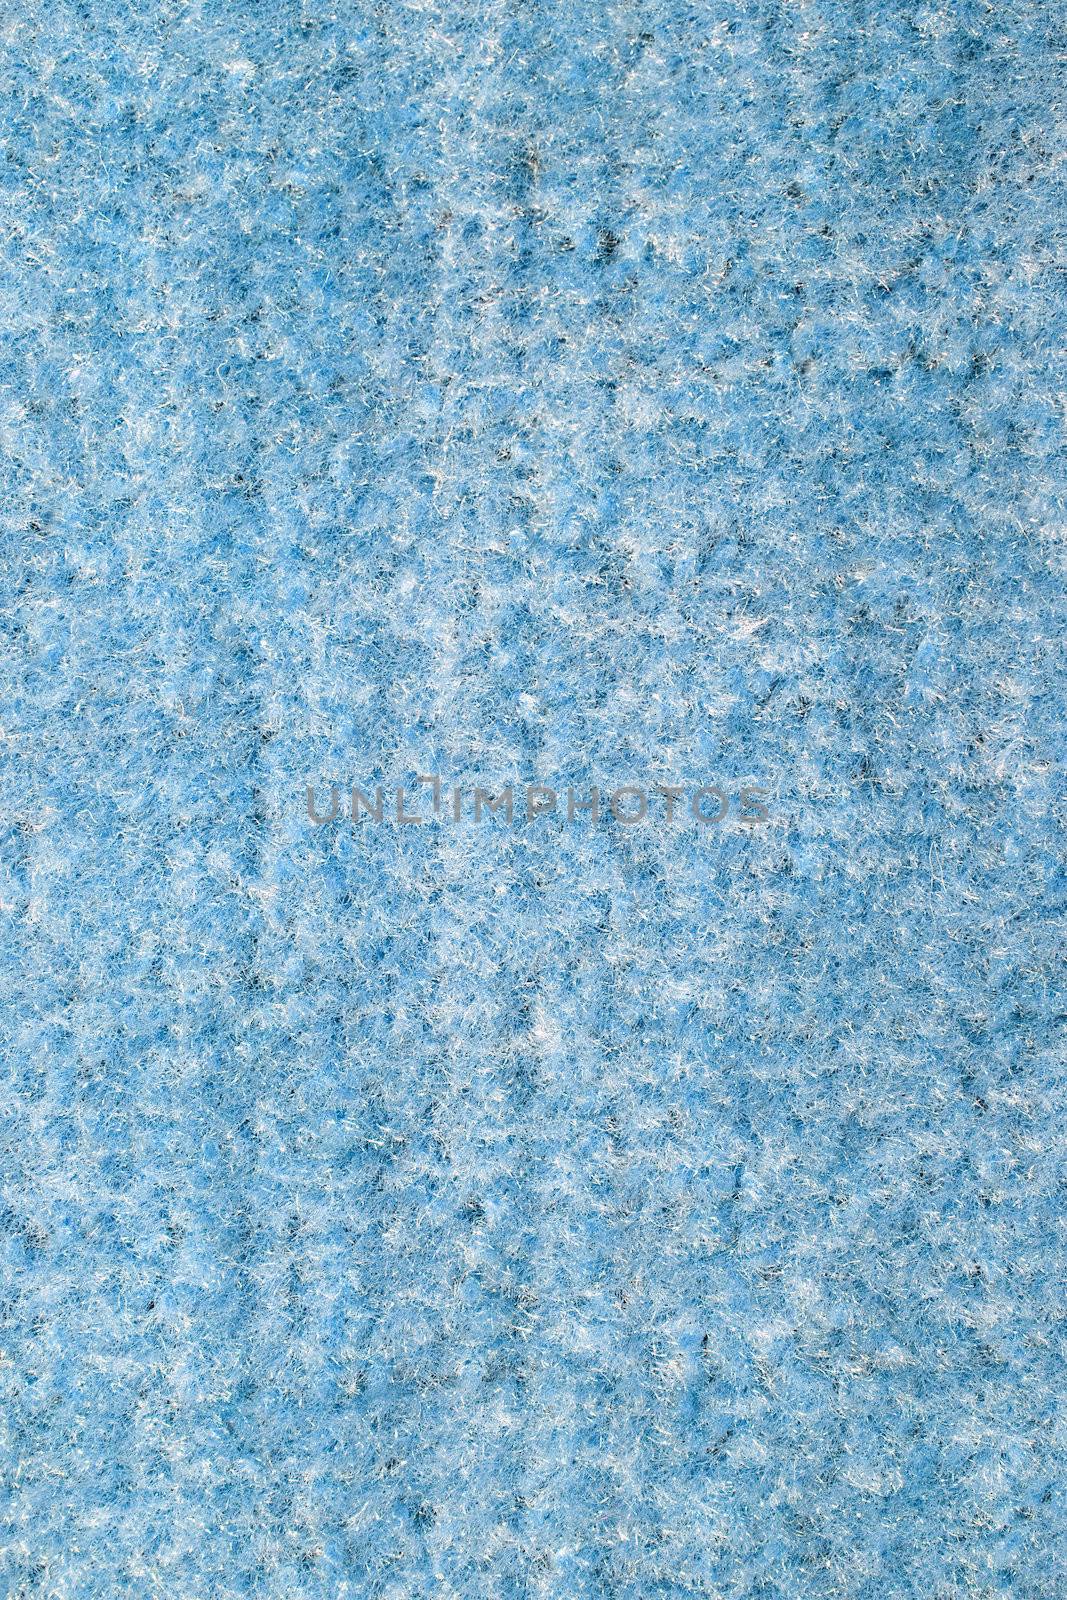 Background of blue carpet or foot scraper by sfinks